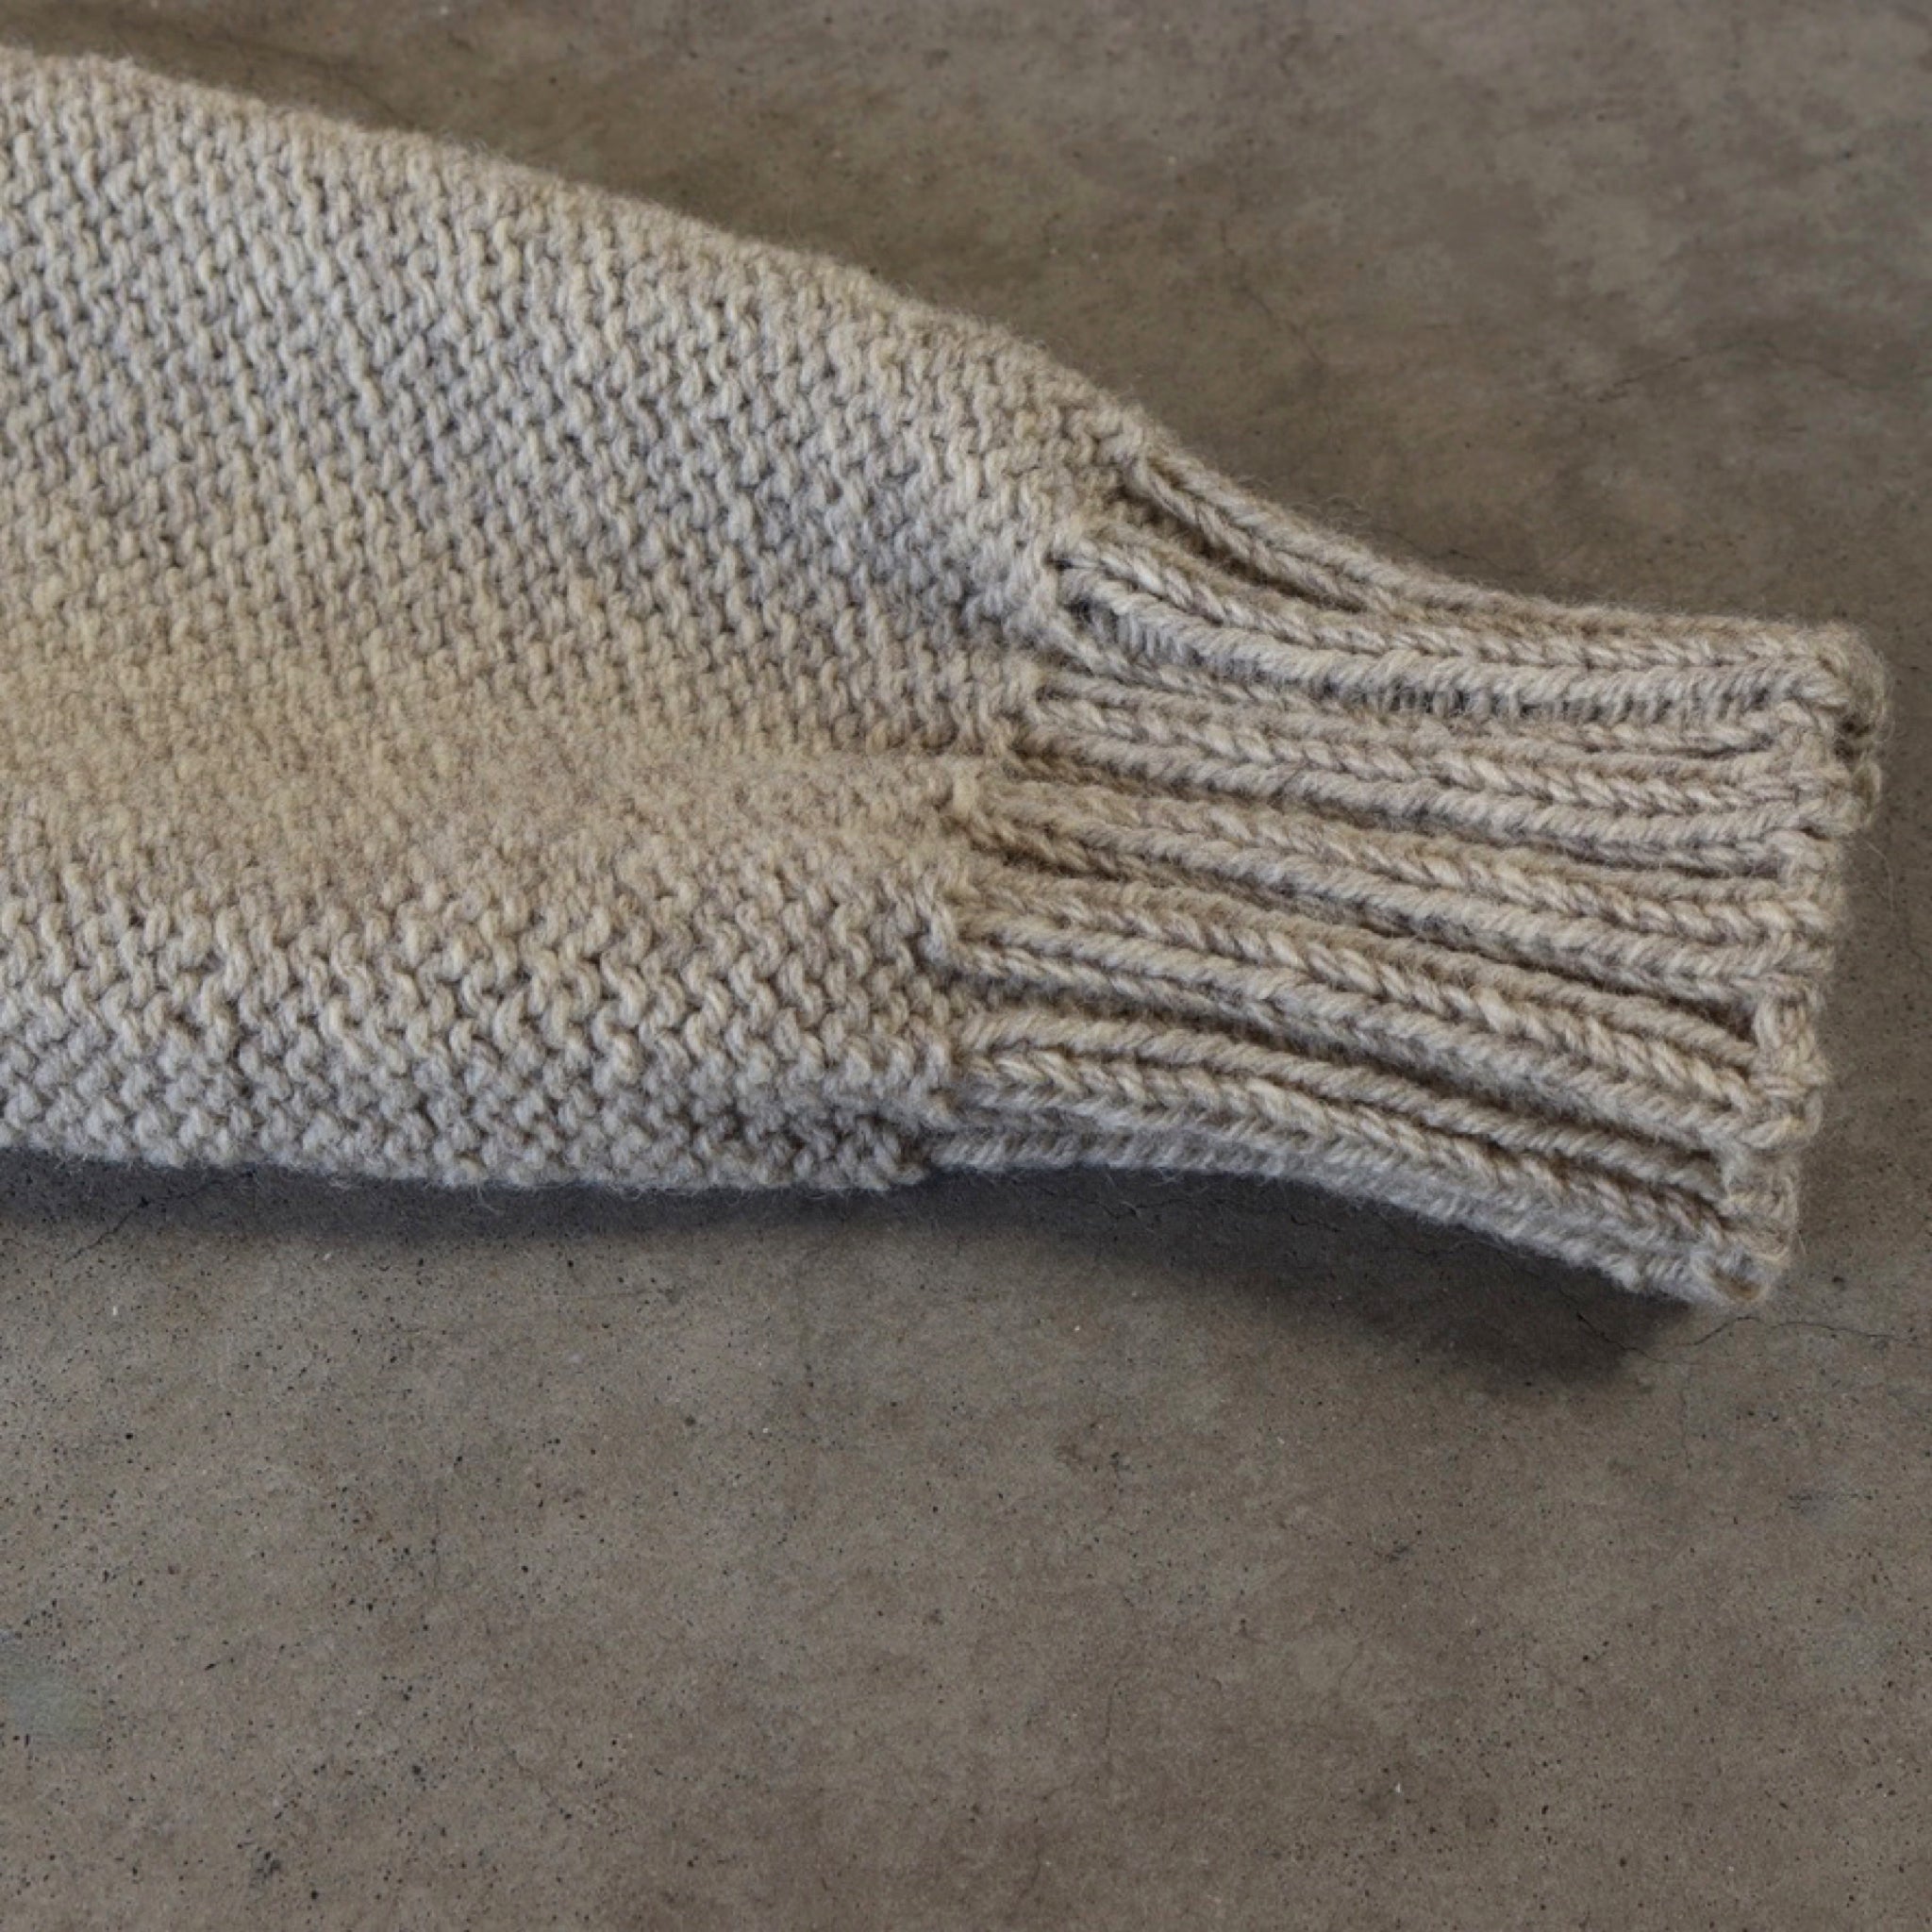 Kesennuma knitting etude - 21